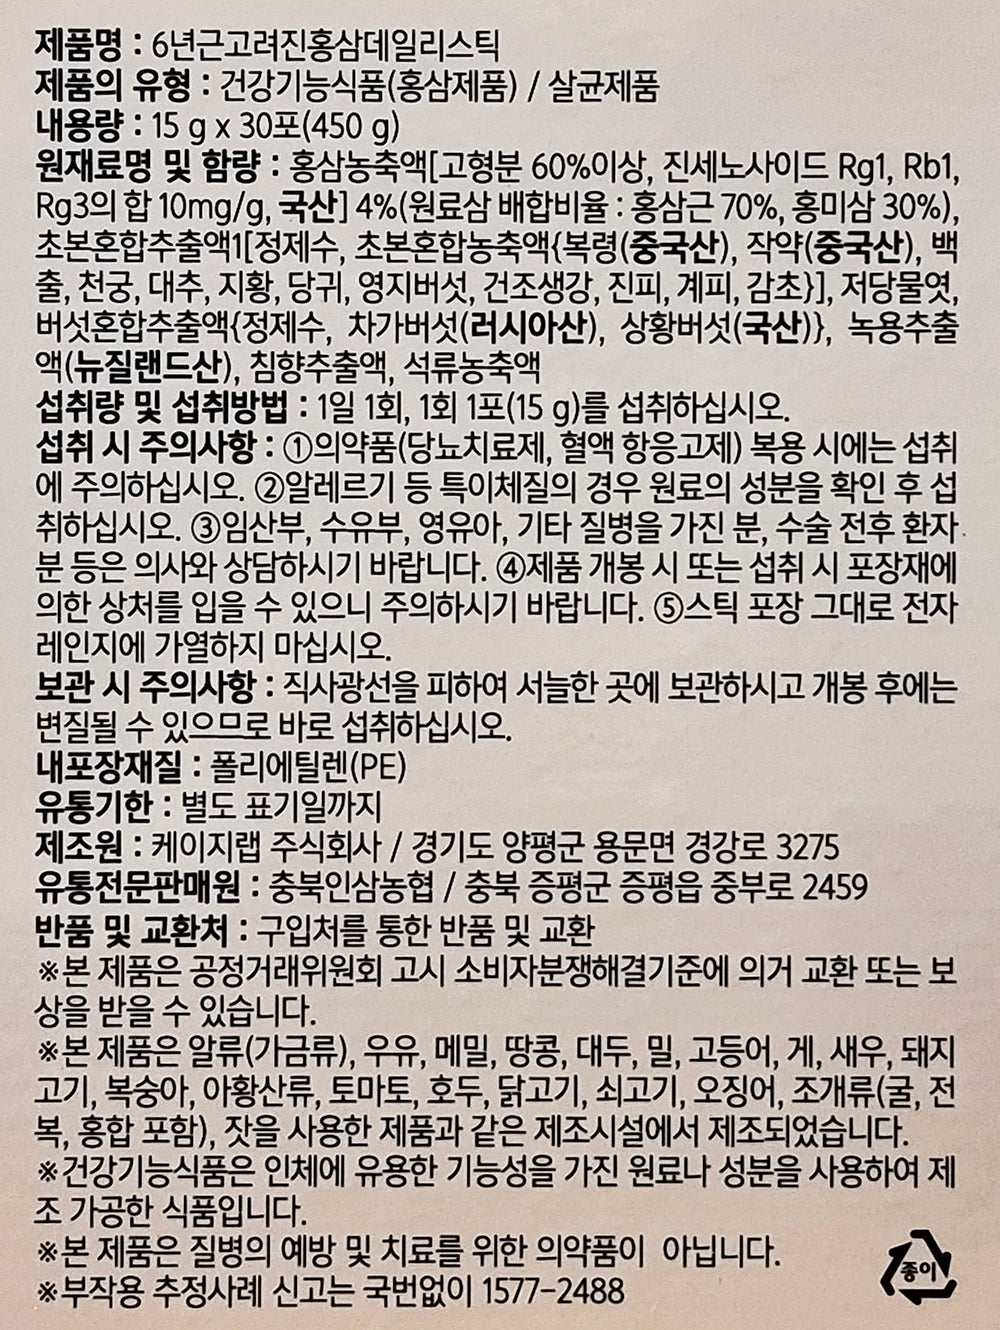 NONGHYUP Korean Red ginseng Daily Sticks 15g x 30p Health supplements